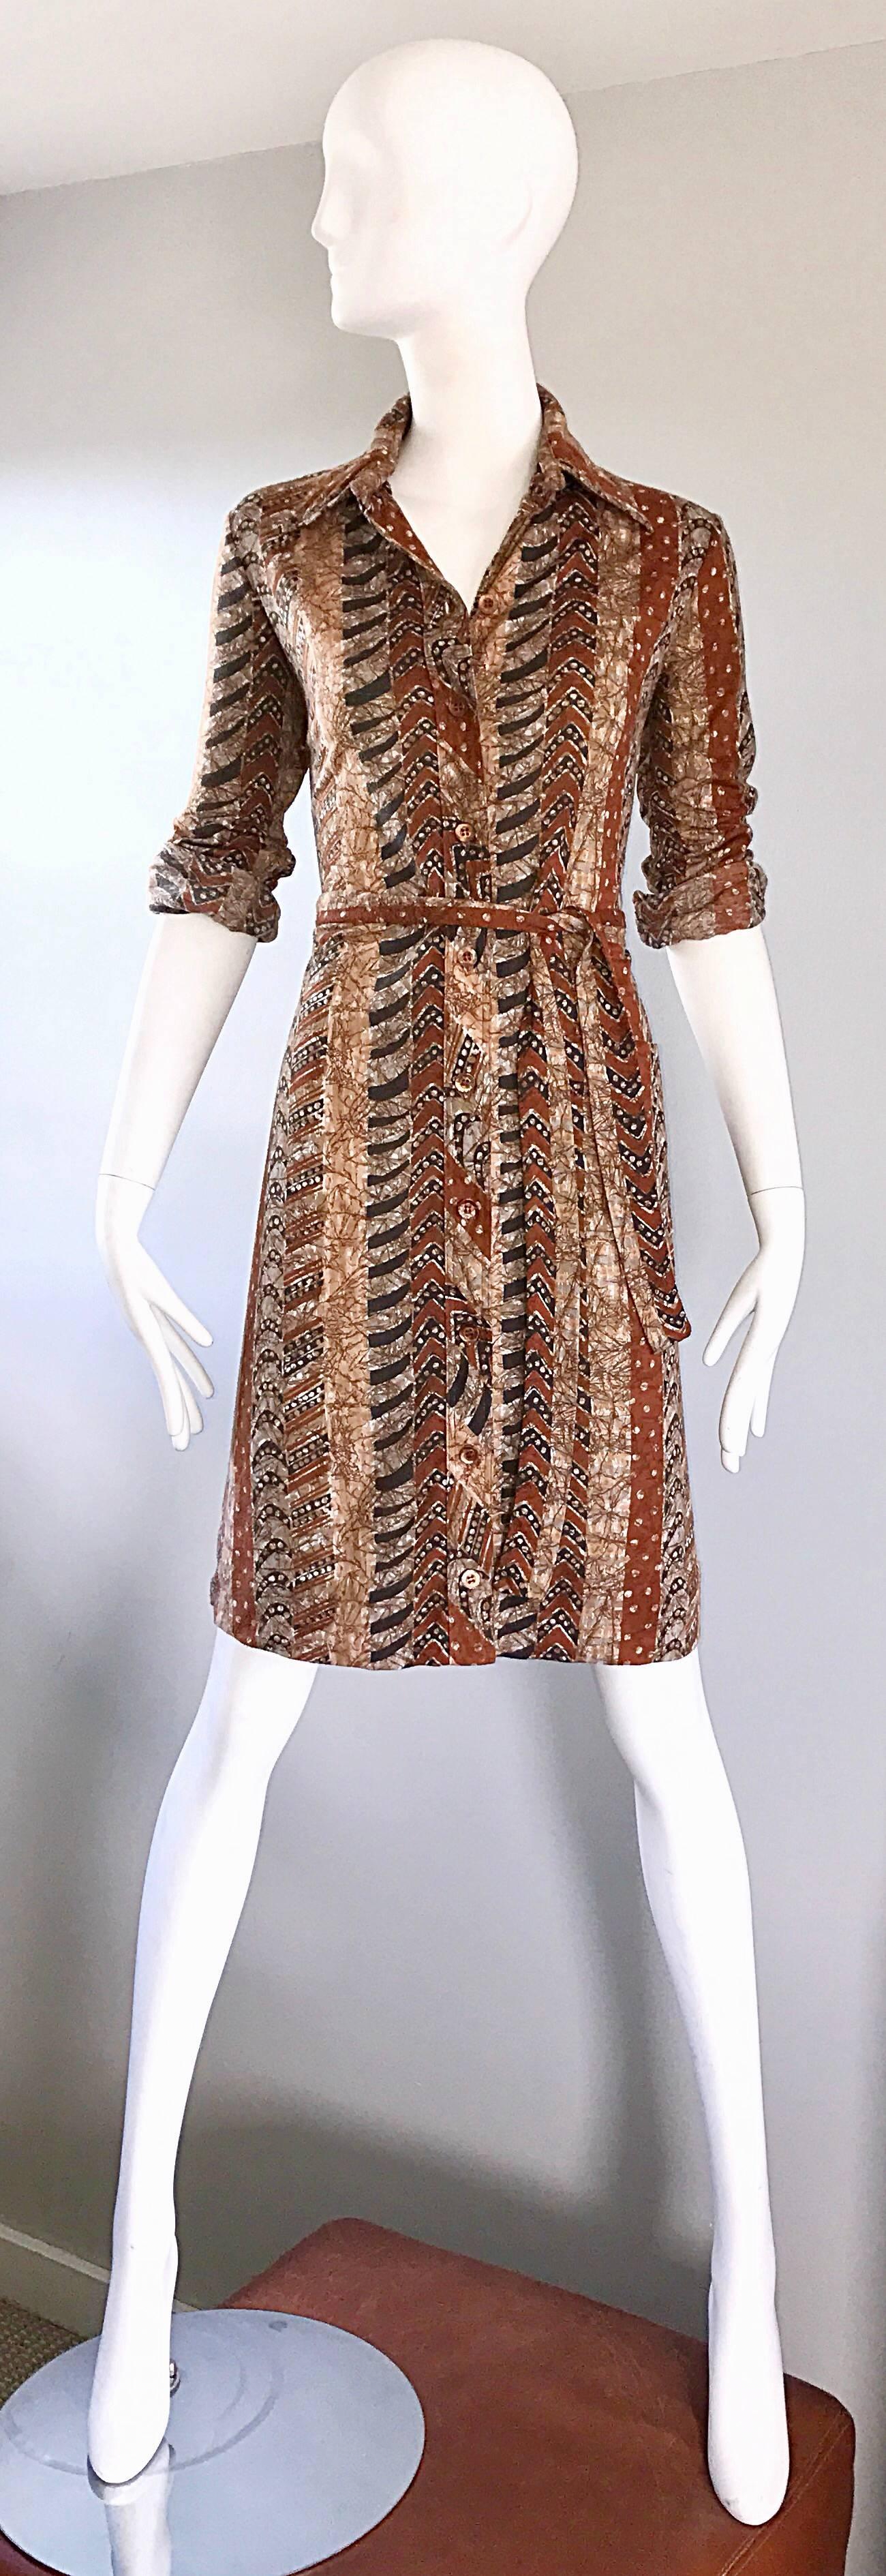 Women's Bonwit Teller 1970s Batik Print Belted Cotton 70s Vintage Brown Safari Dress  For Sale